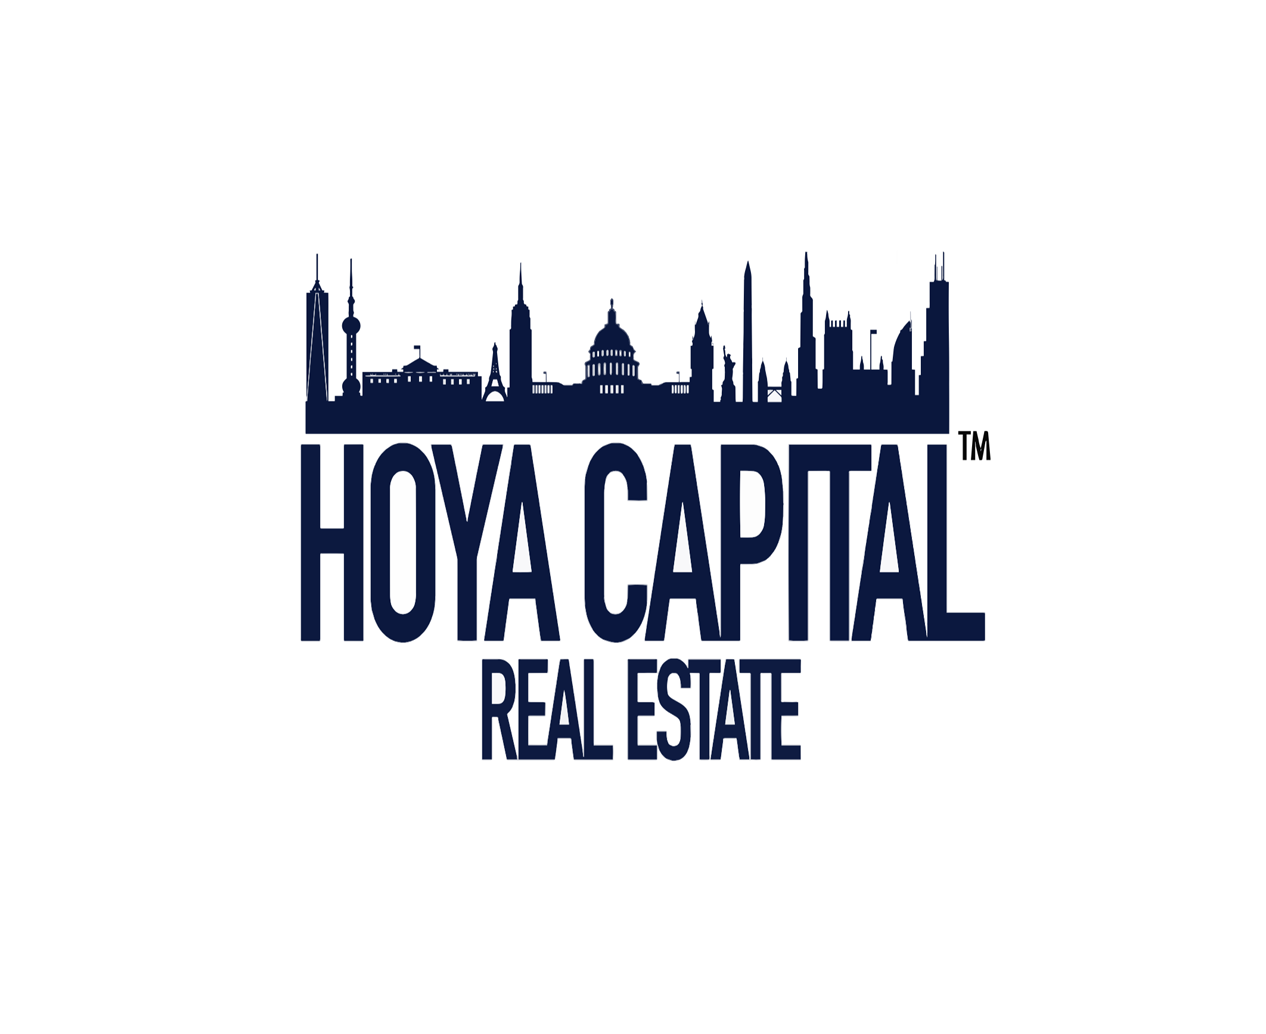 Hoya Capital